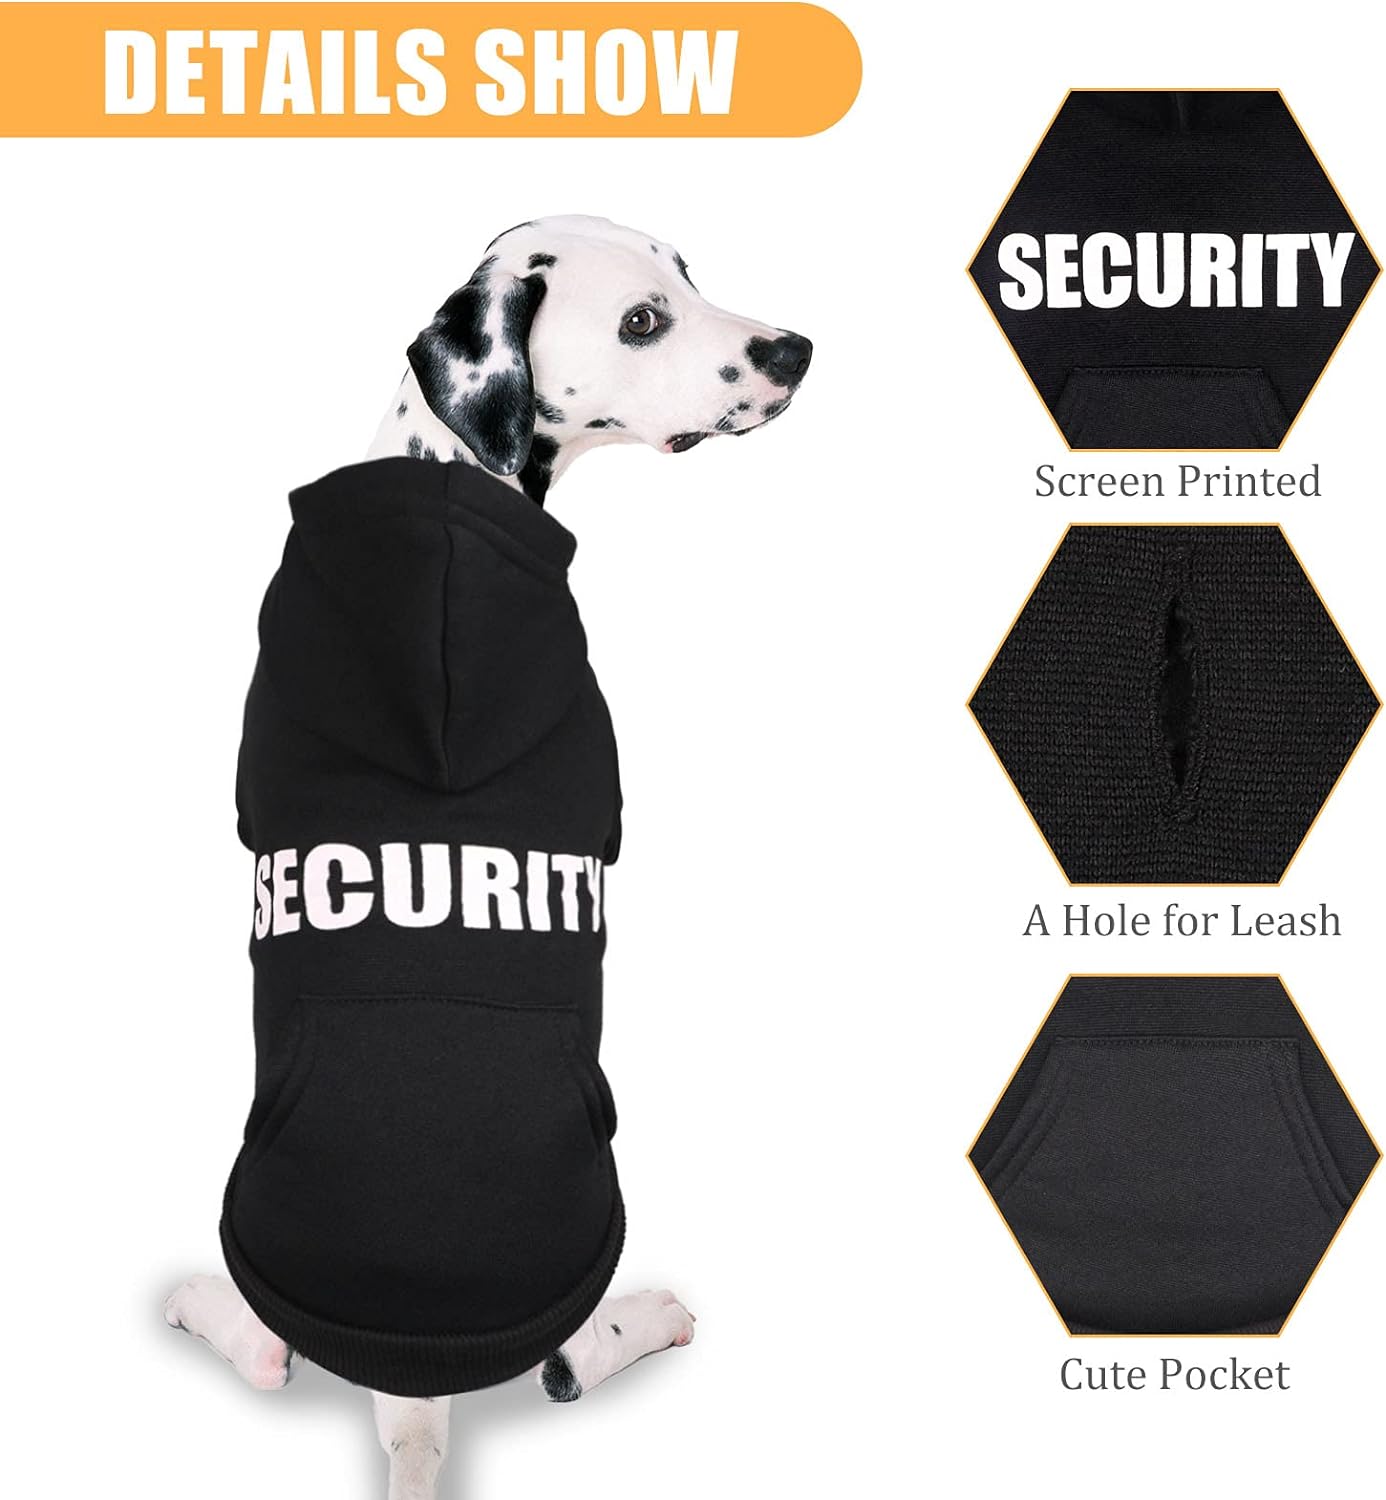 Uteuvili Dog Hoodie Security Dog Sweater Soft Brushed Fleece Dog Clothes Dog Hoodie Sweatshirt with Pocket Dog Sweaters for Medium Dogs(M), Black